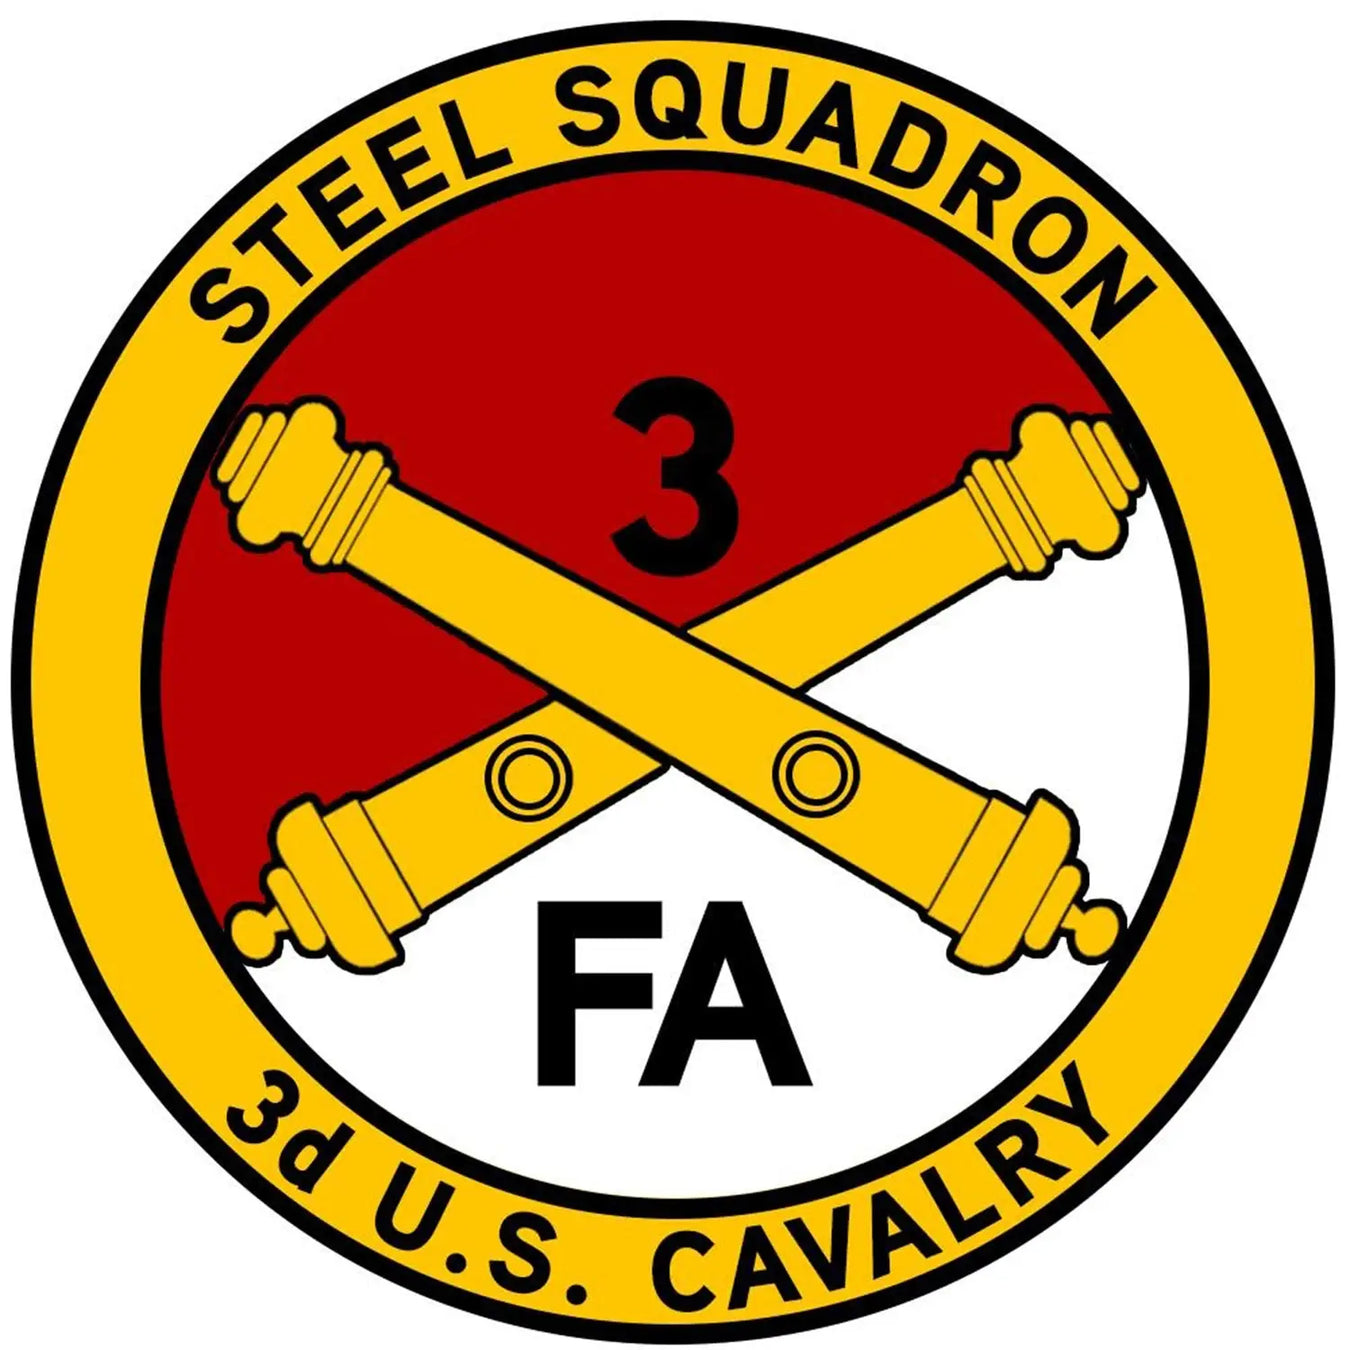 Field Artillery Squadron 3rd Cavalry Regiment "Steel"